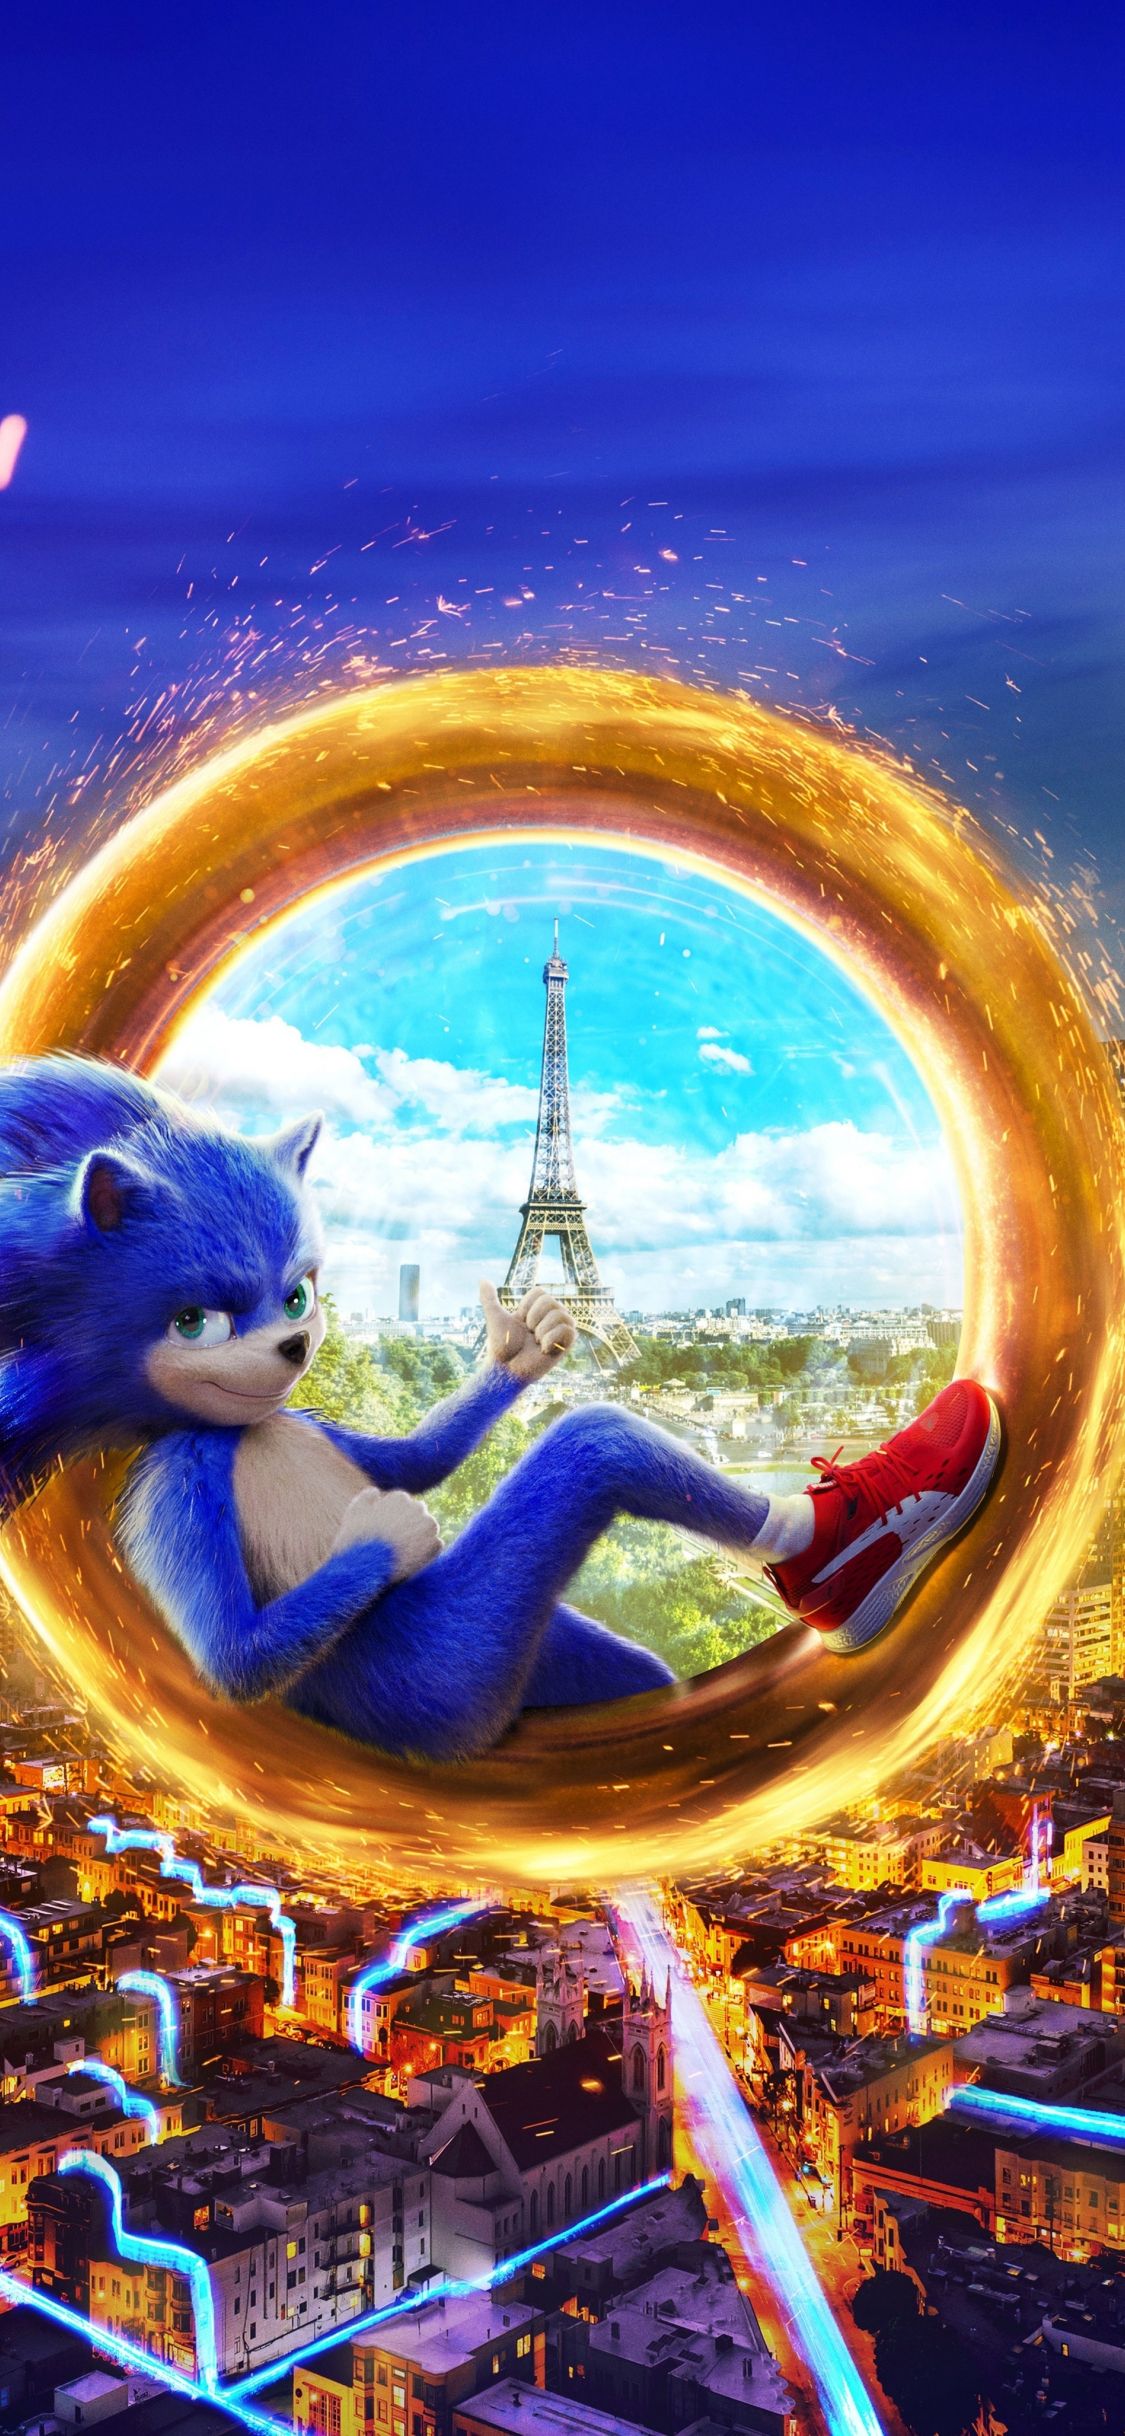 Download 1125x2436 Wallpaper Sonic The Hedgehog, 2019 Movie.